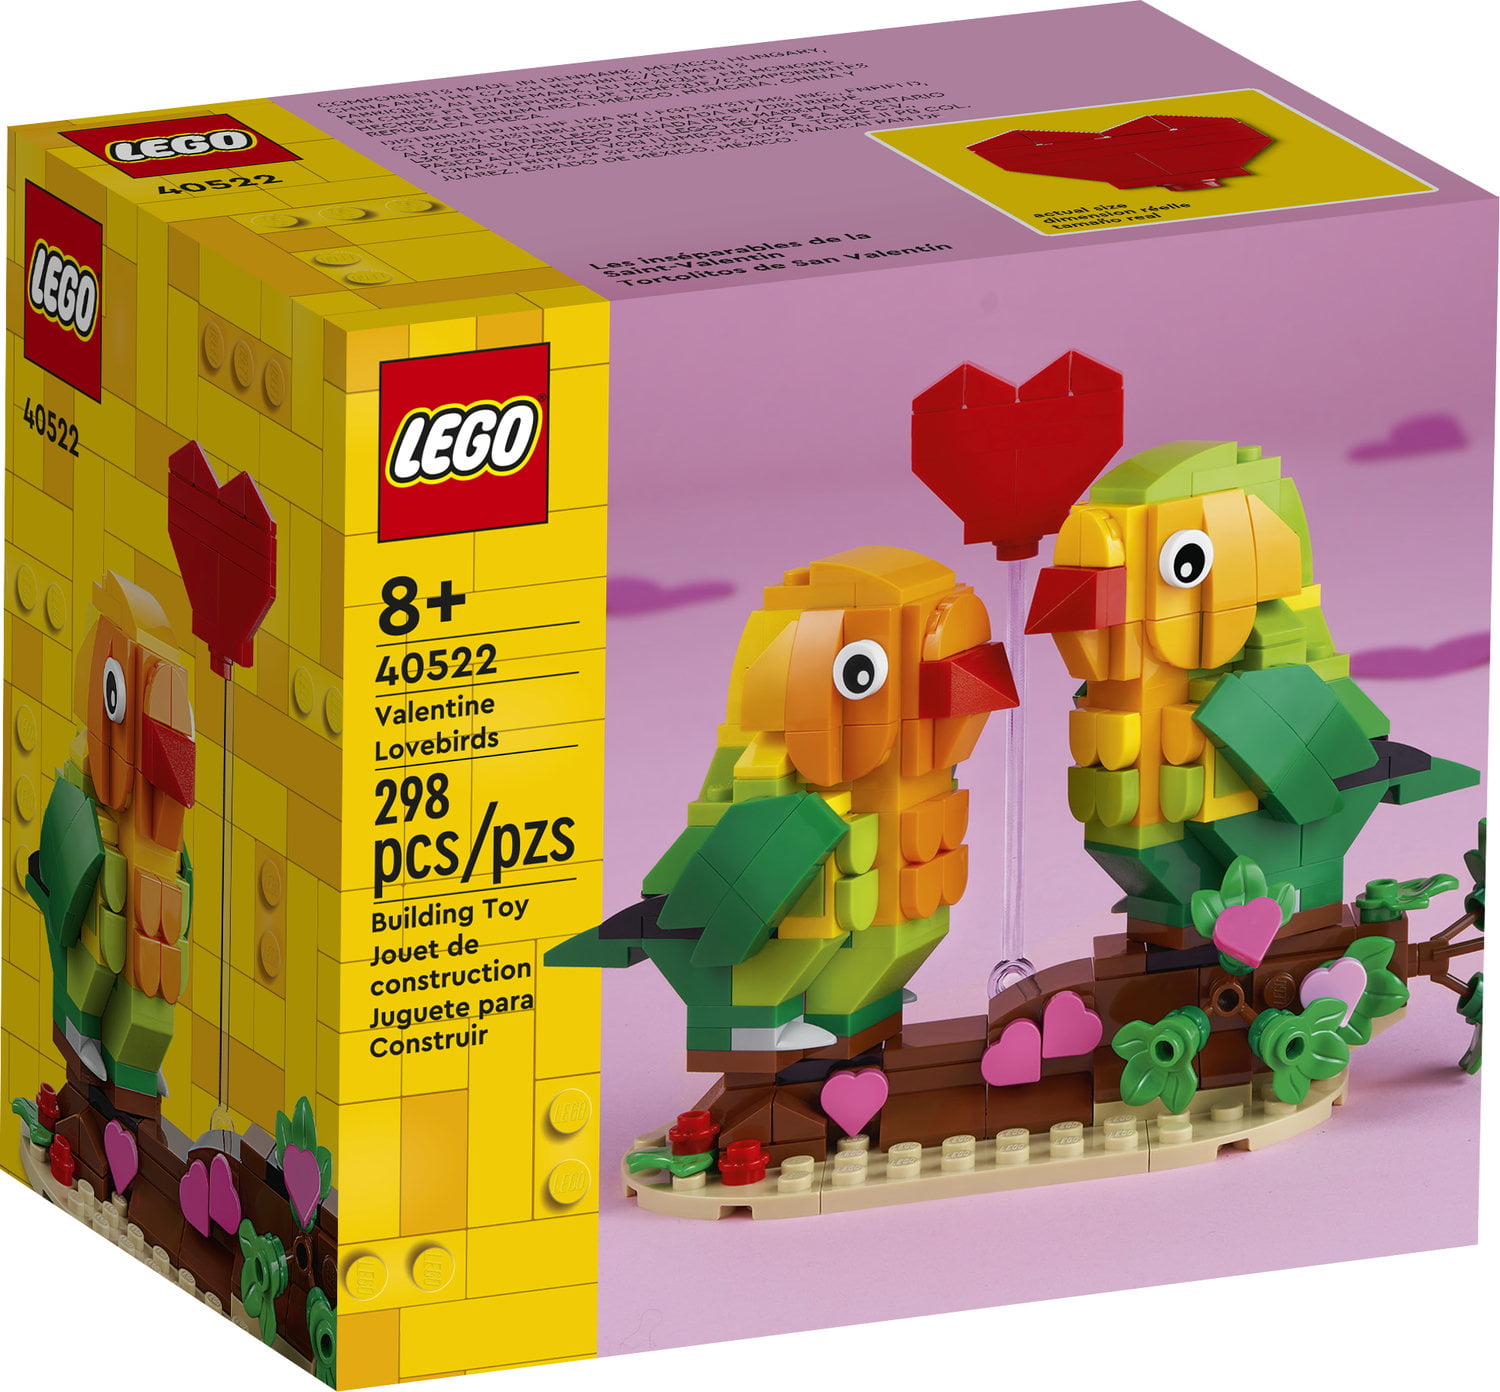 Roses CREATOR mazzo Fiori LEGO 40460 ORIGINALE SIGILLATO consegna 24h Rose 